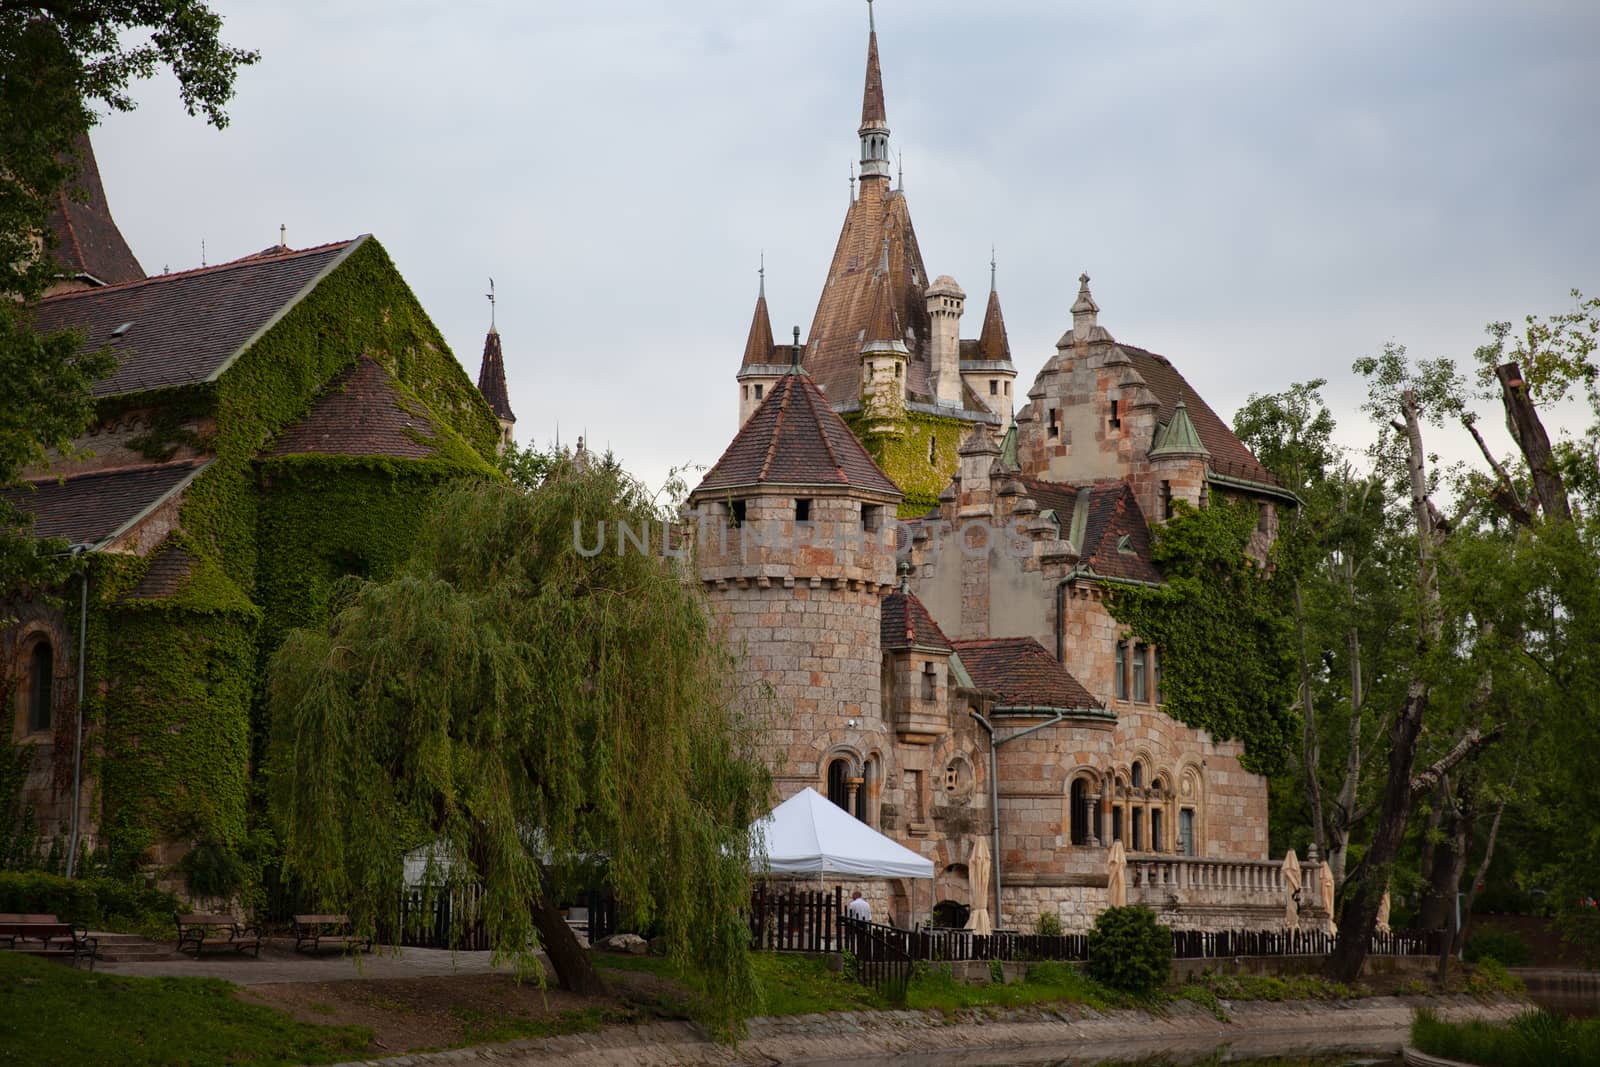 Vajdahunyad Castle, Budapest, Hungary by vlad-m